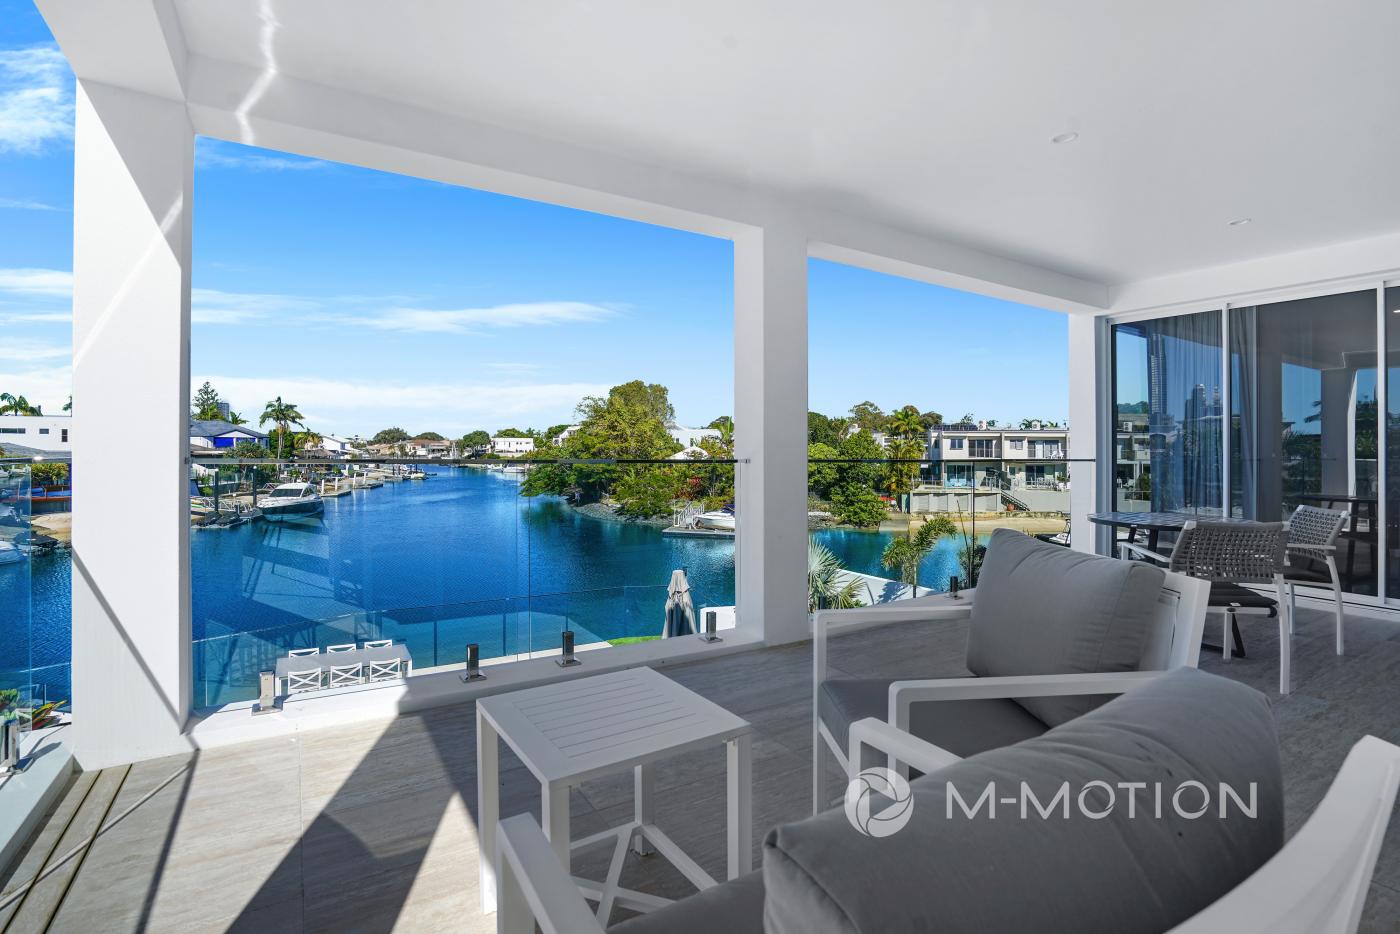 M-Motion Real Estate Agency, 25 Inga Avenue Surfers Paradise Gold Coast, Michael Mahon Lauren Mahon Best Real Estate Agent - 12